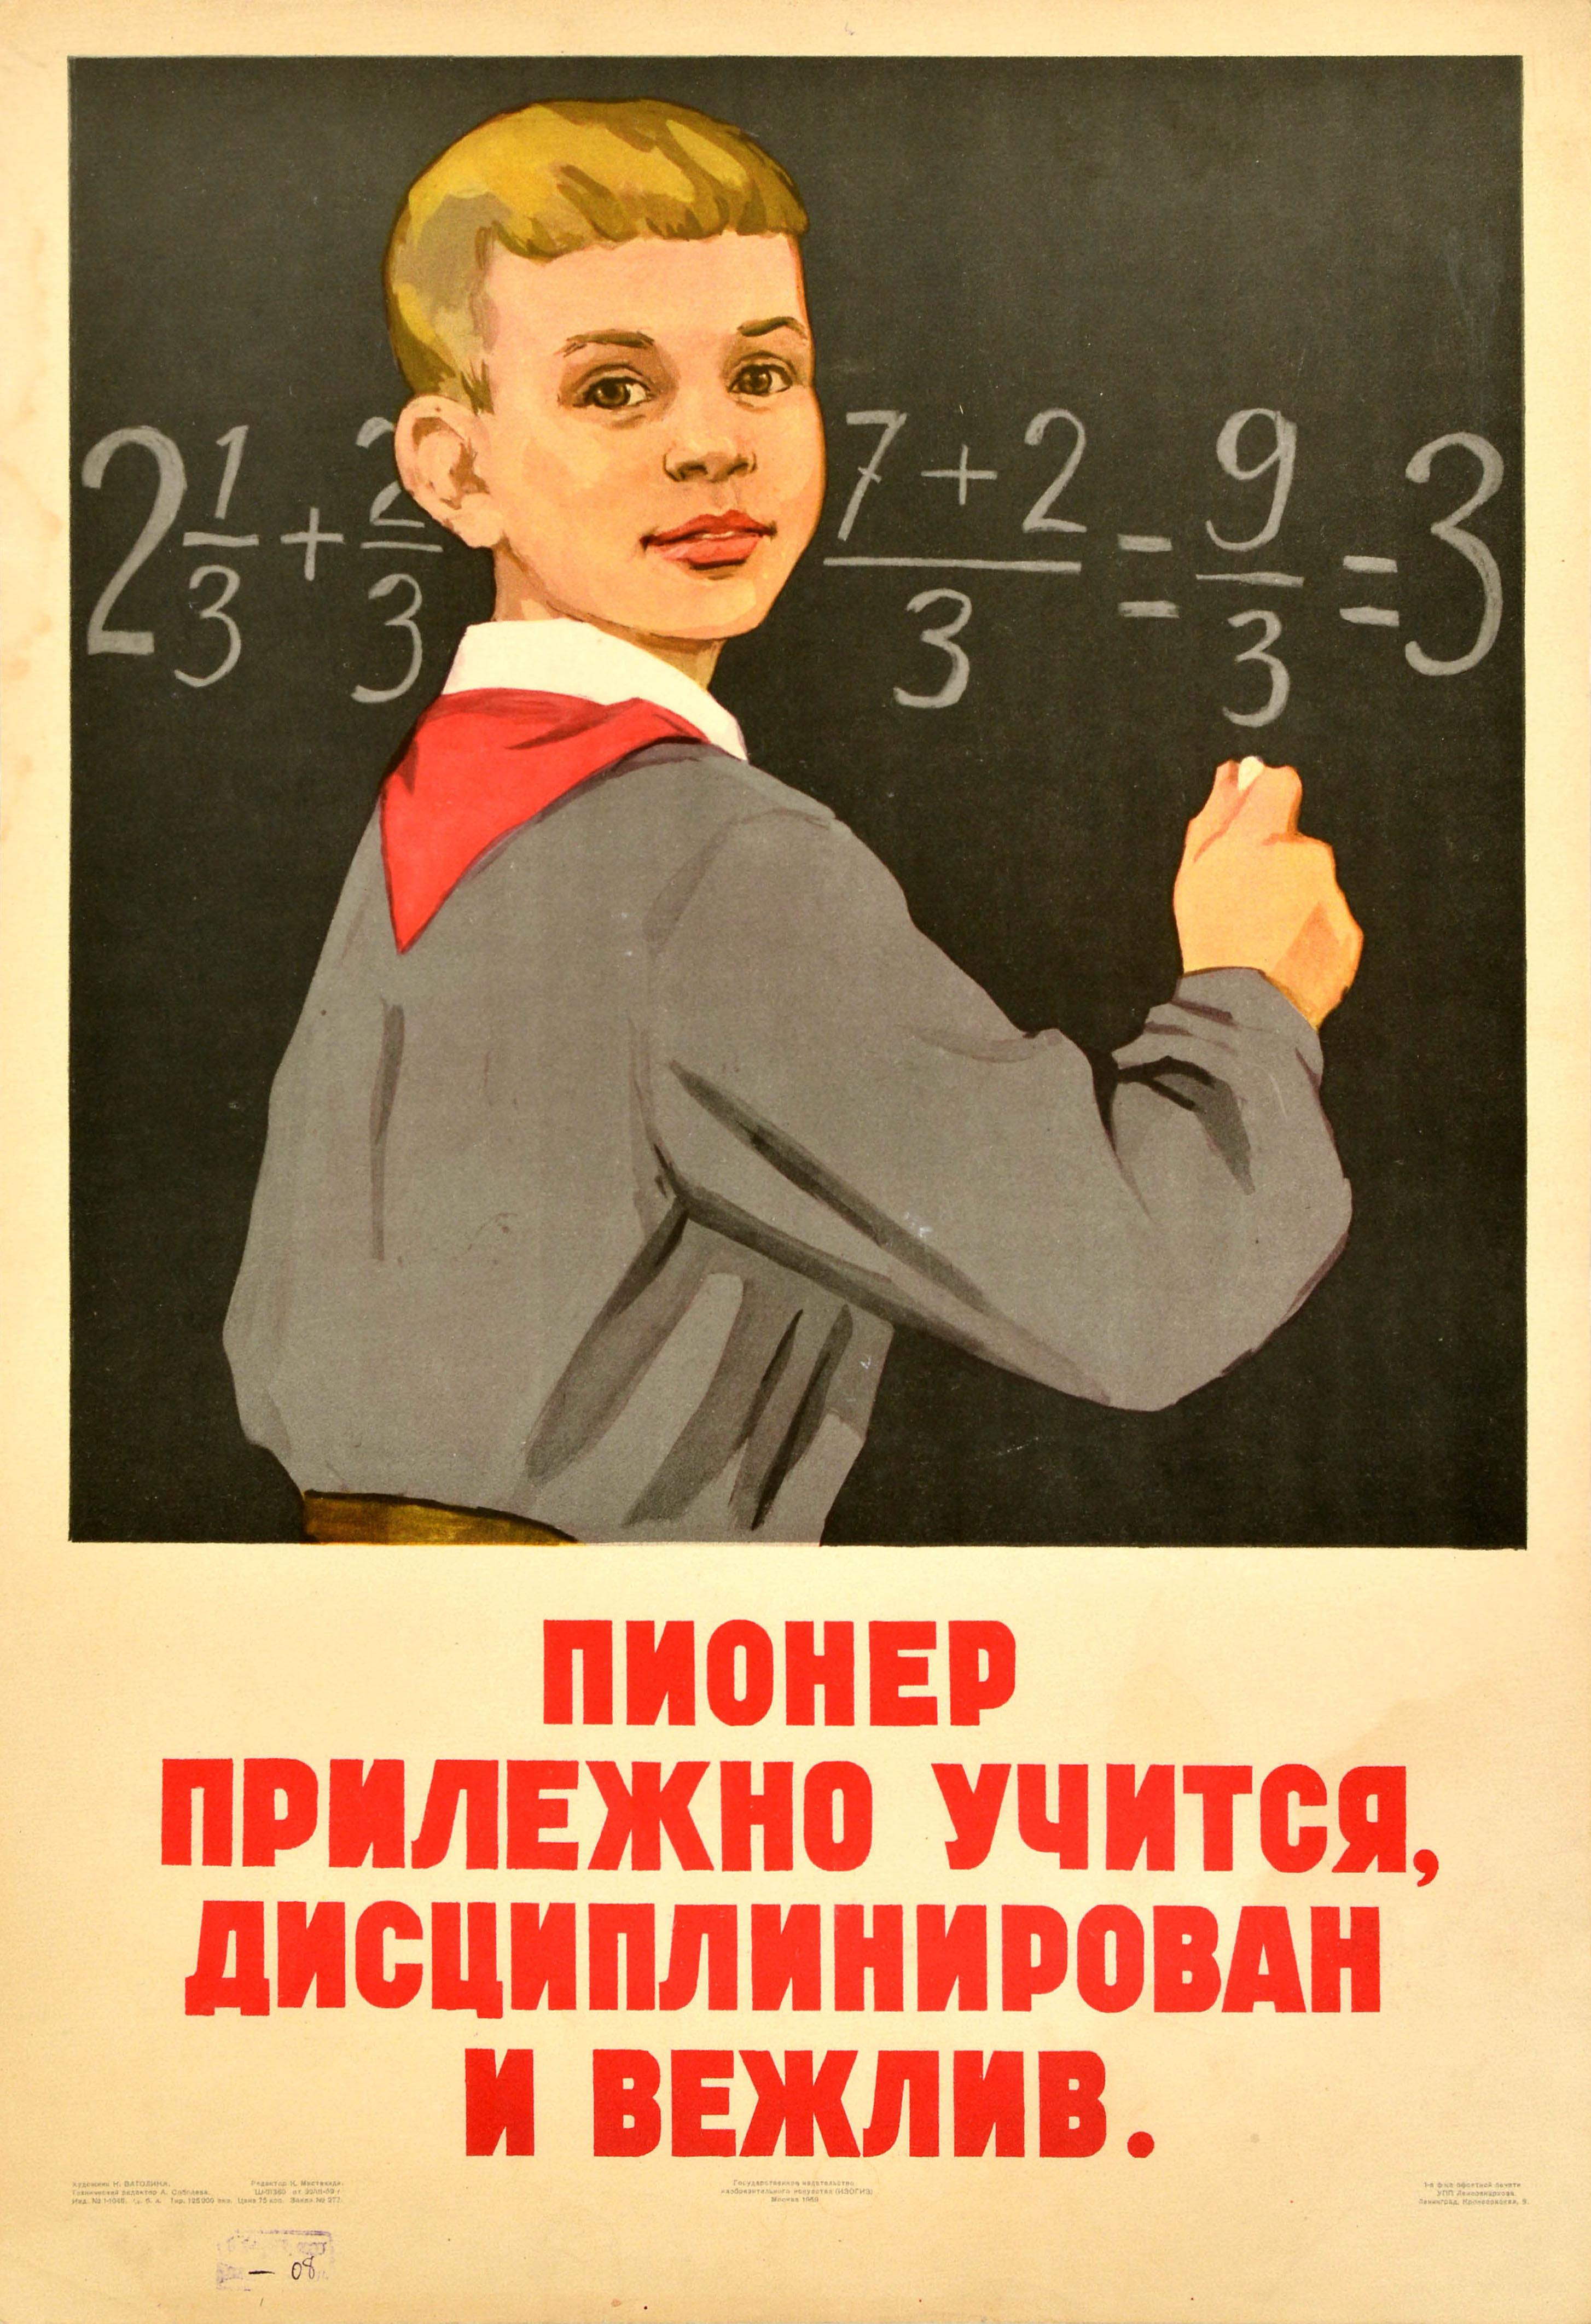 Unknown Print - Original Vintage Soviet Propaganda Poster Pioneer Diligent Student Discipline